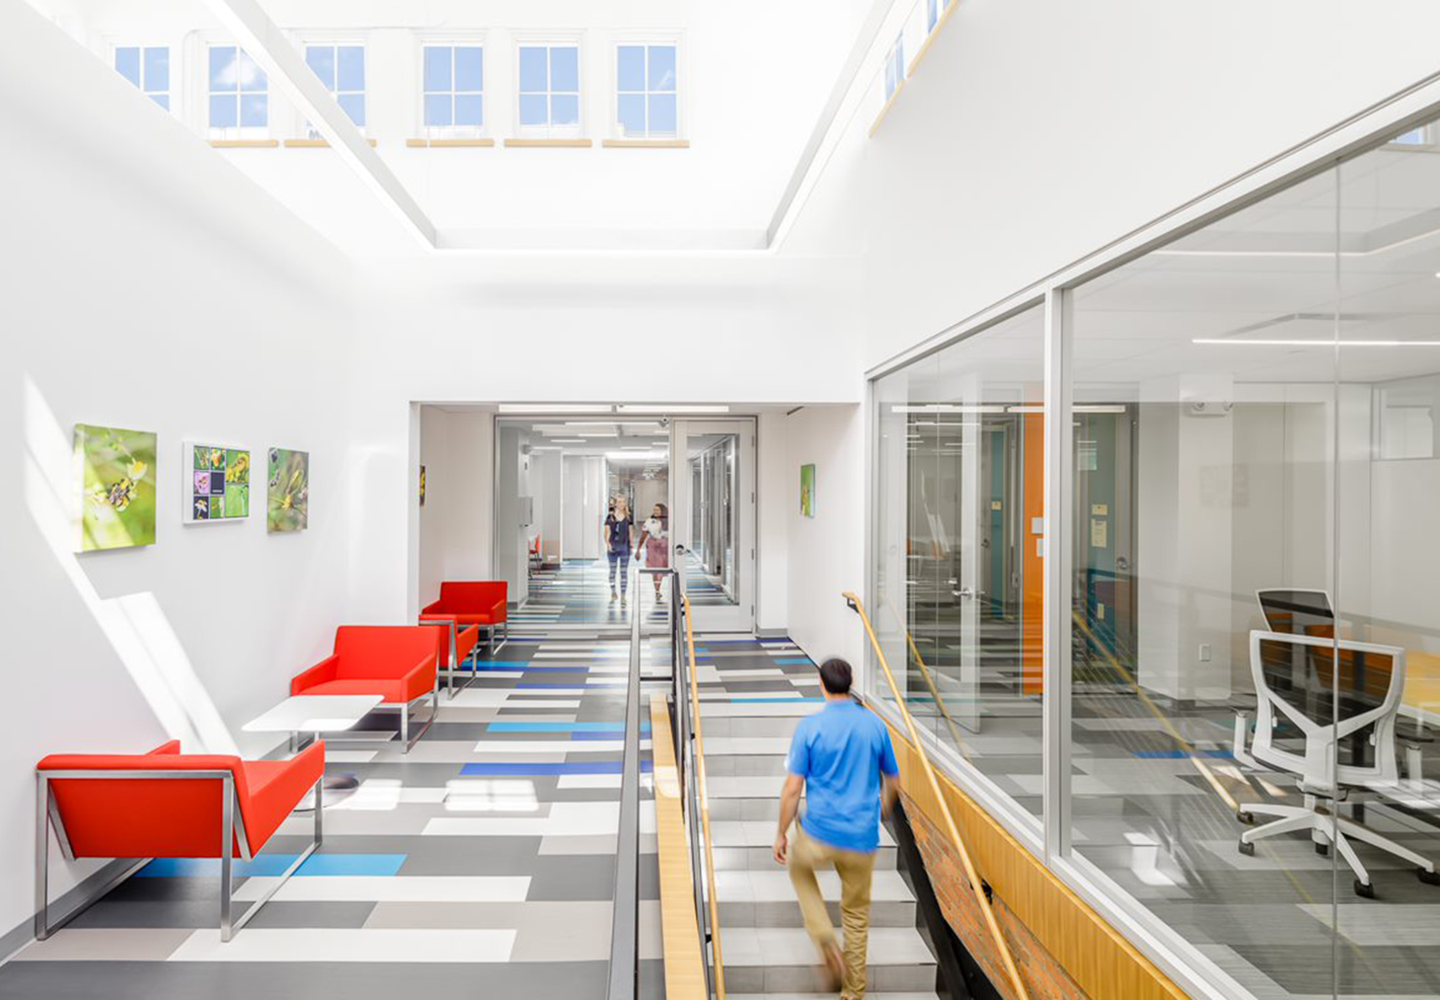 Hallway and stairway of SmartLabs Cambridge/MIT Site